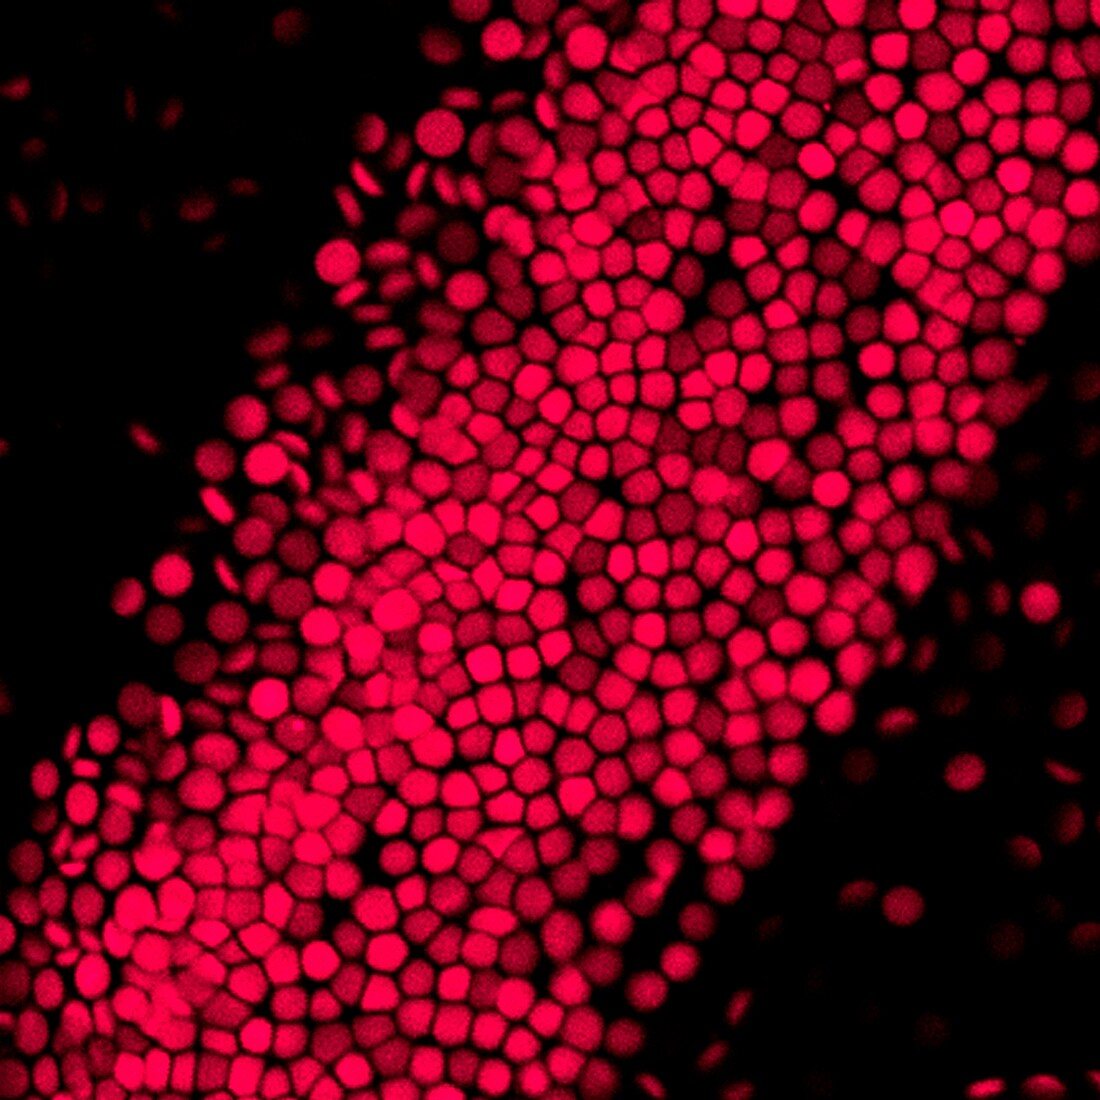 Red blood cell-mimicking nanotechnology